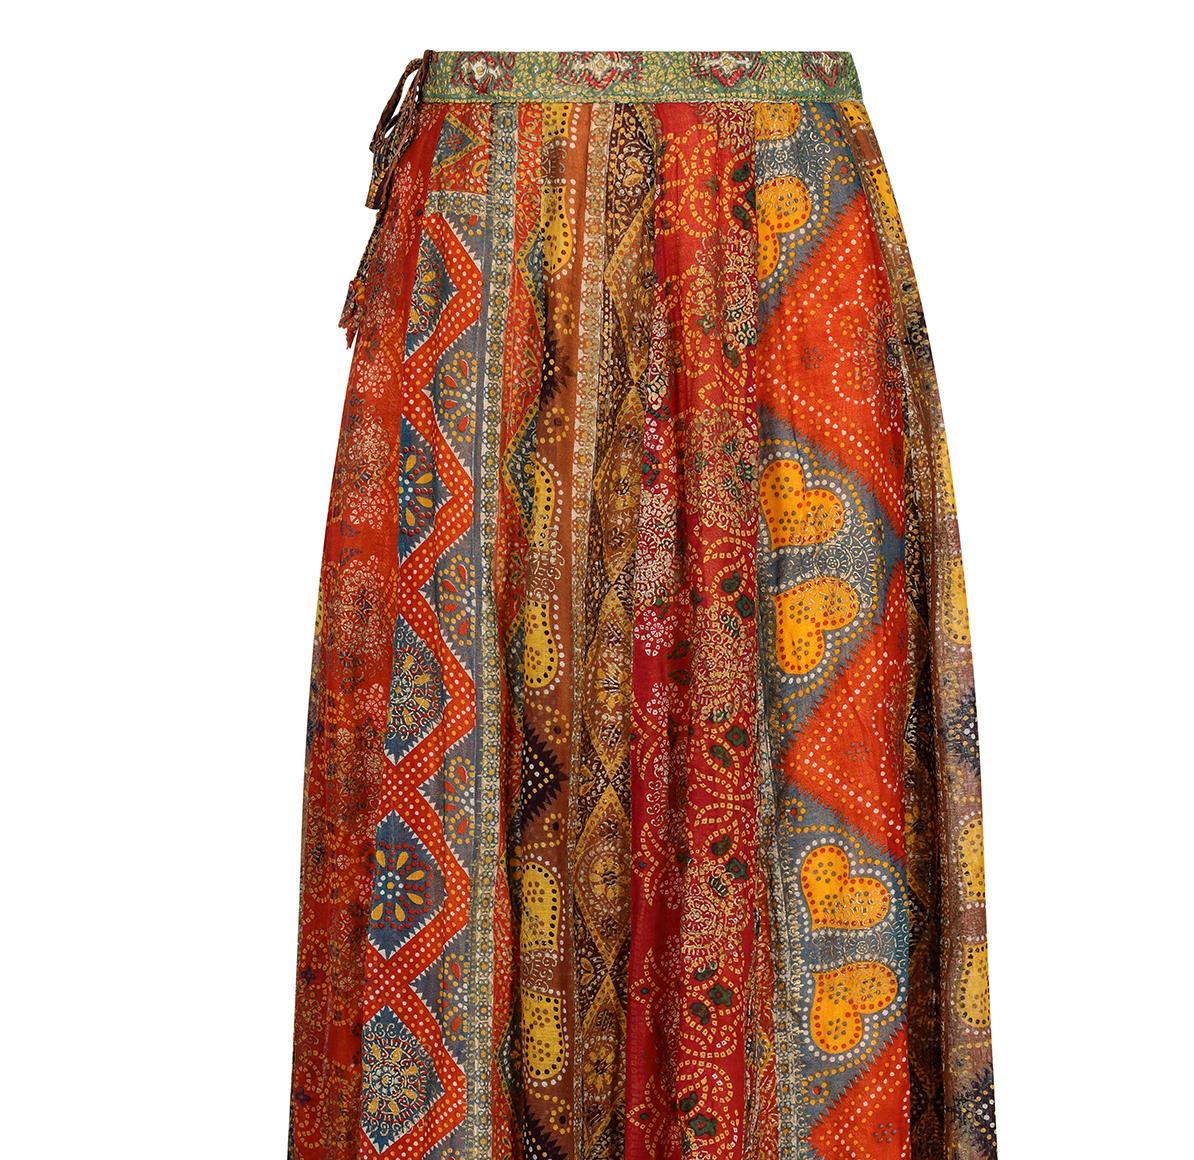 Women's 1960s Early 1970s Block Print Indian Boho Skirt